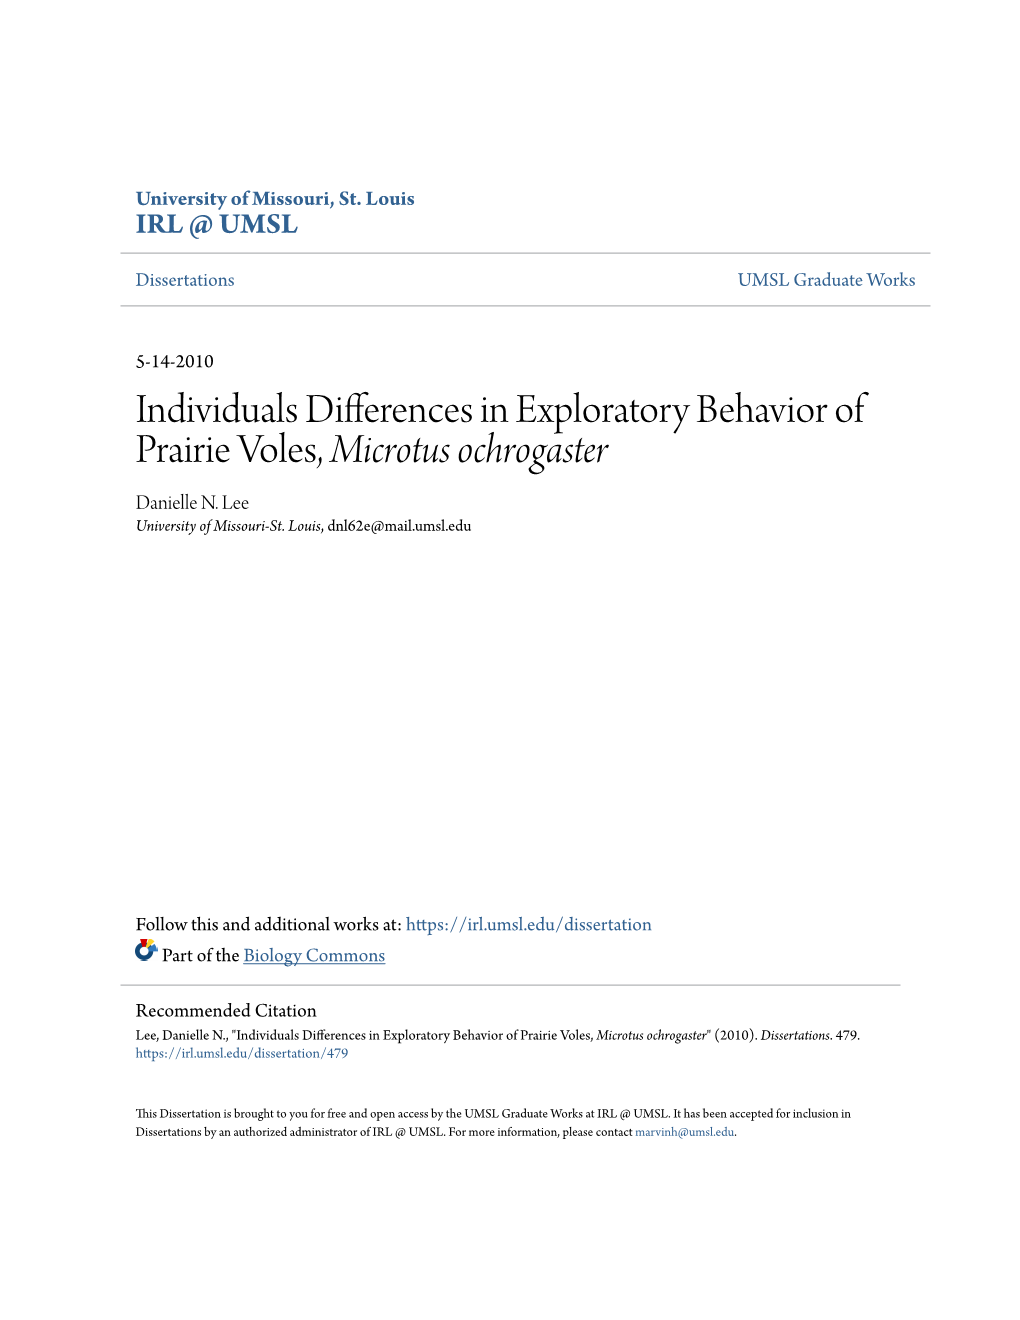 Individuals Differences in Exploratory Behavior of Prairie Voles, Microtus Ochrogaster Danielle N